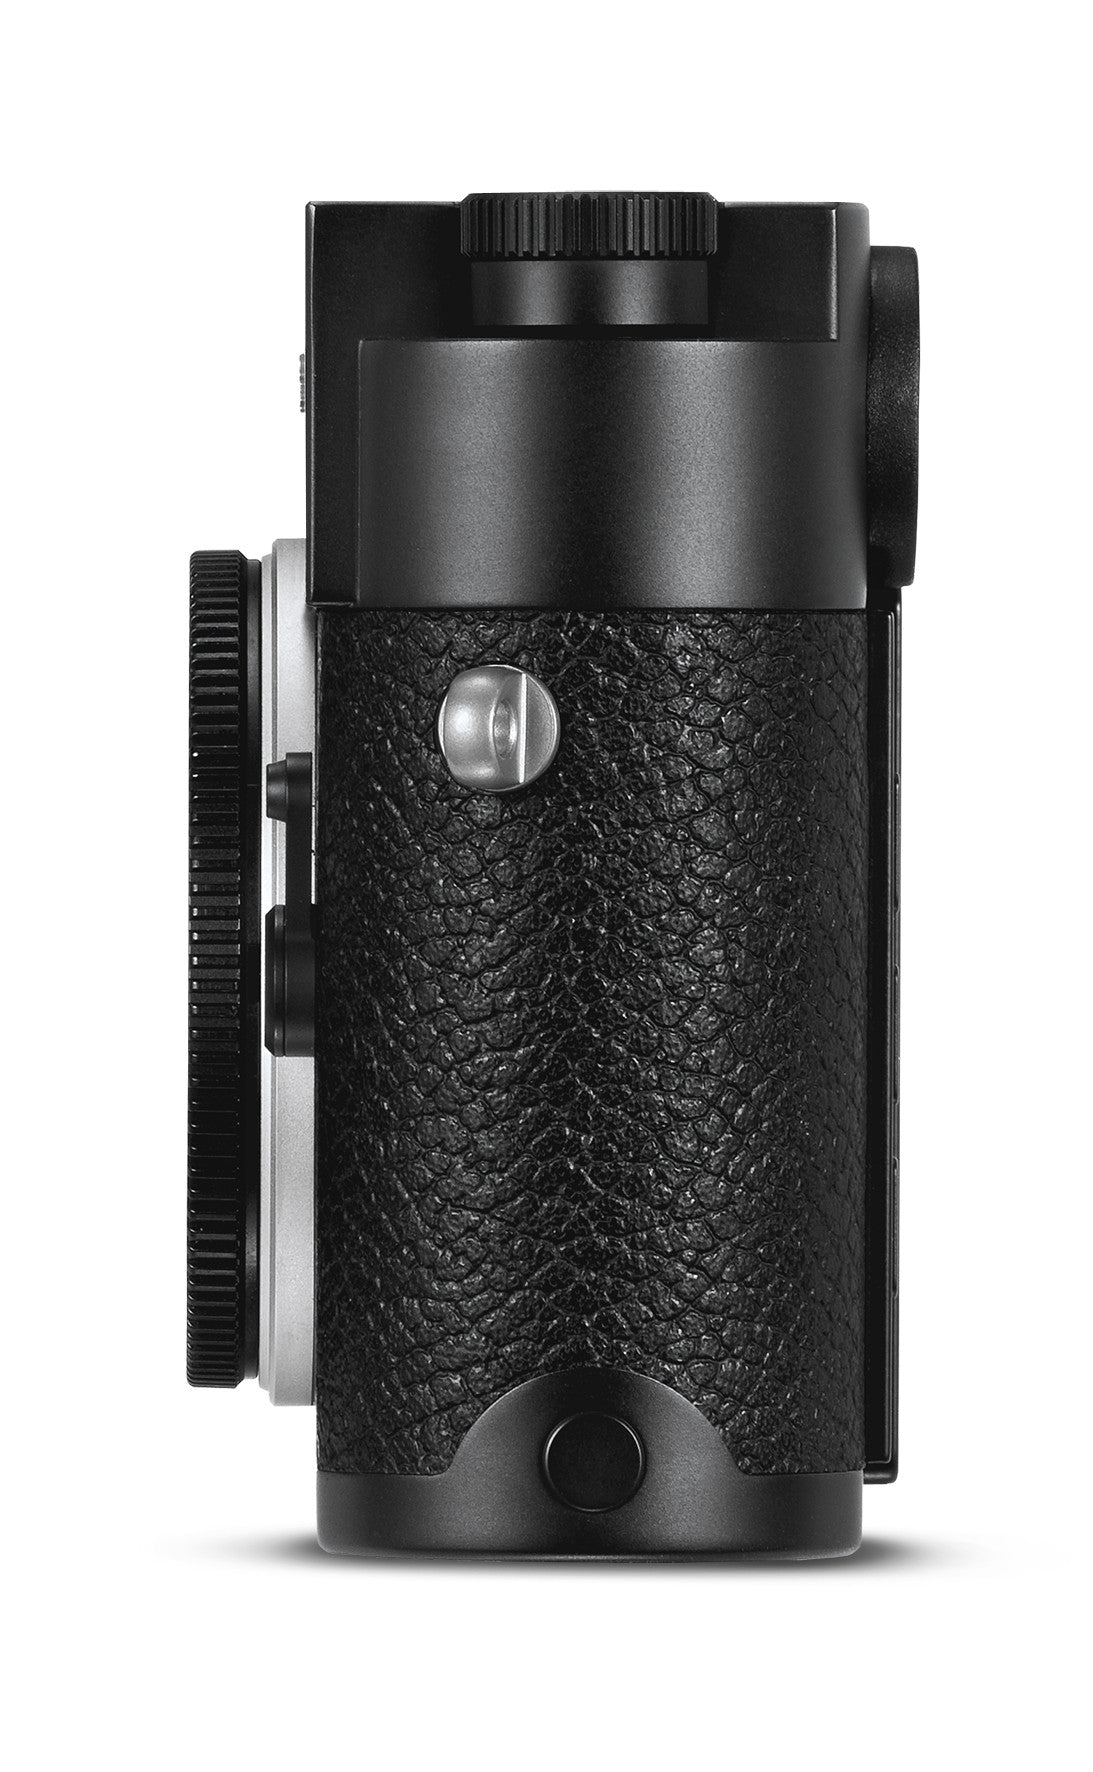 Leica M10 Digital Camera (Black), camera mirrorless cameras, Leica - Pictureline  - 3